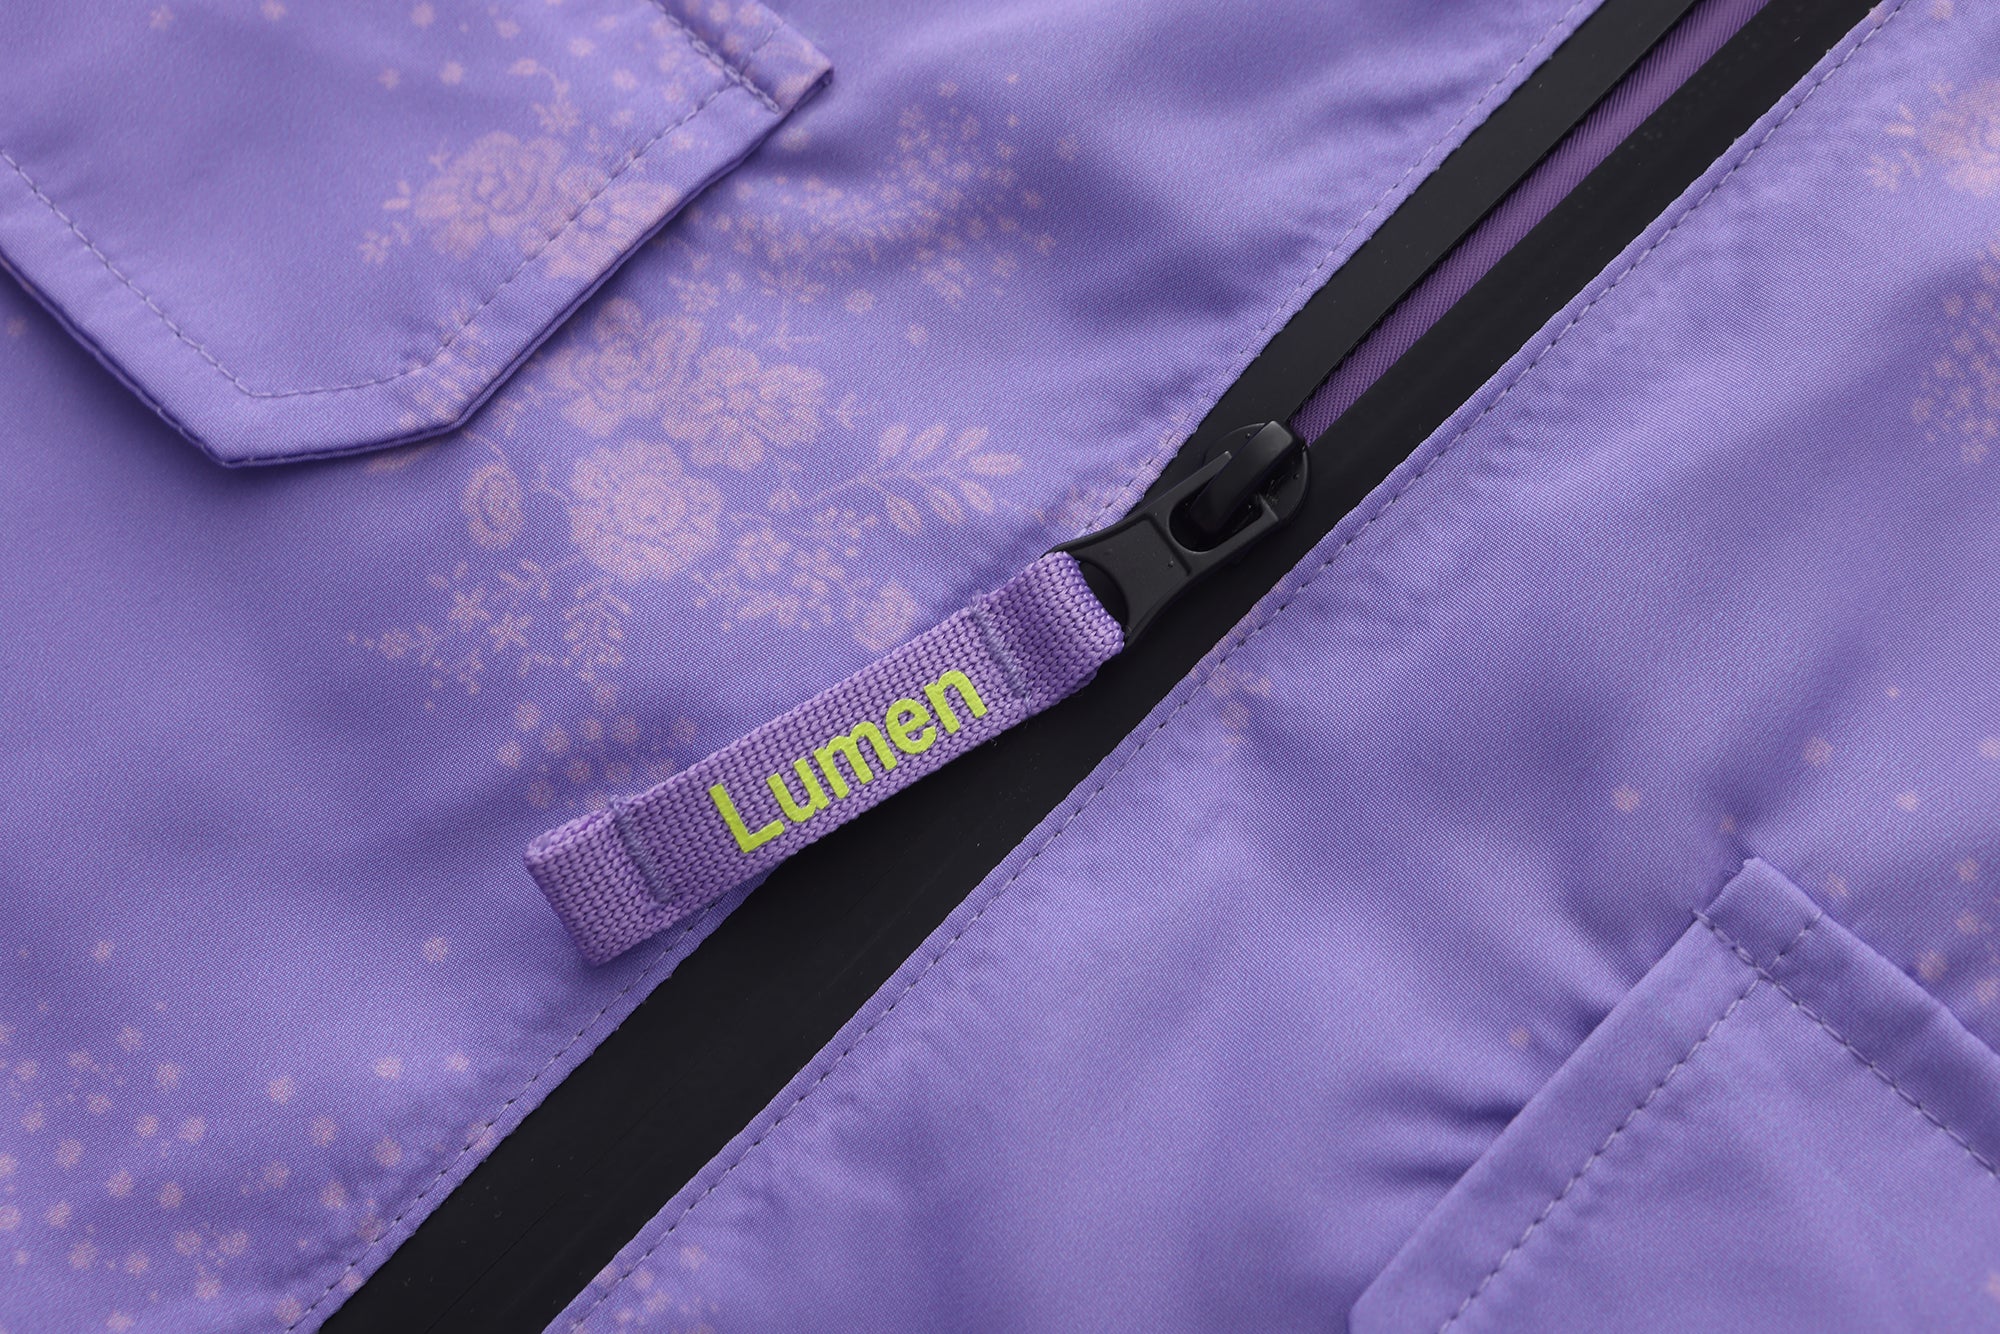 Purple Flower Jacket